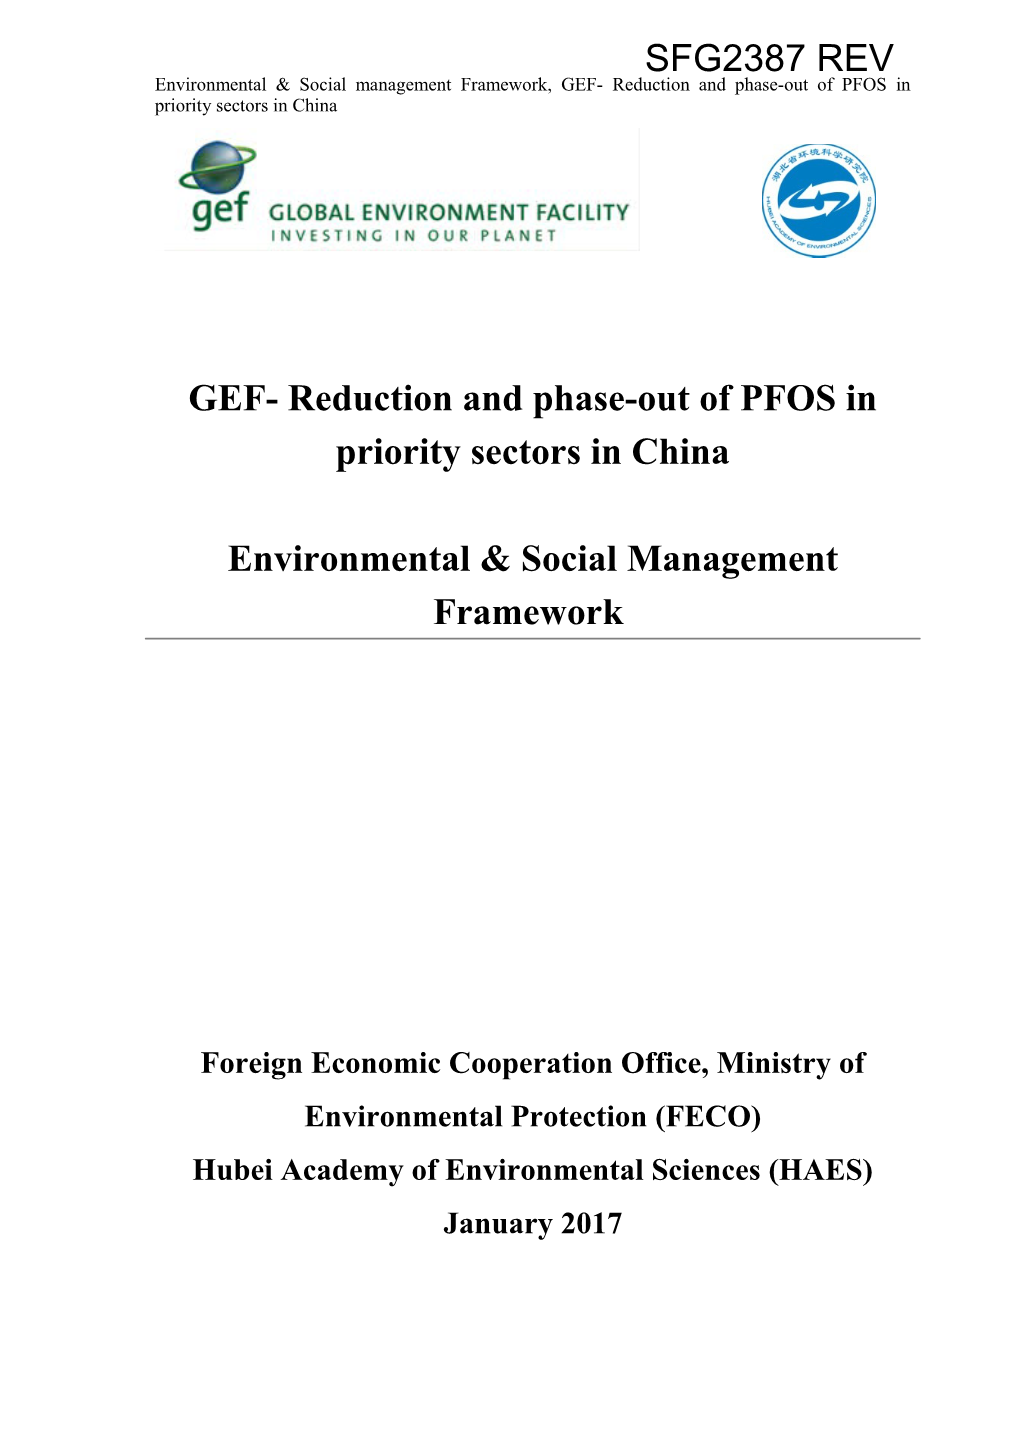 Part I Environmental Management Framework